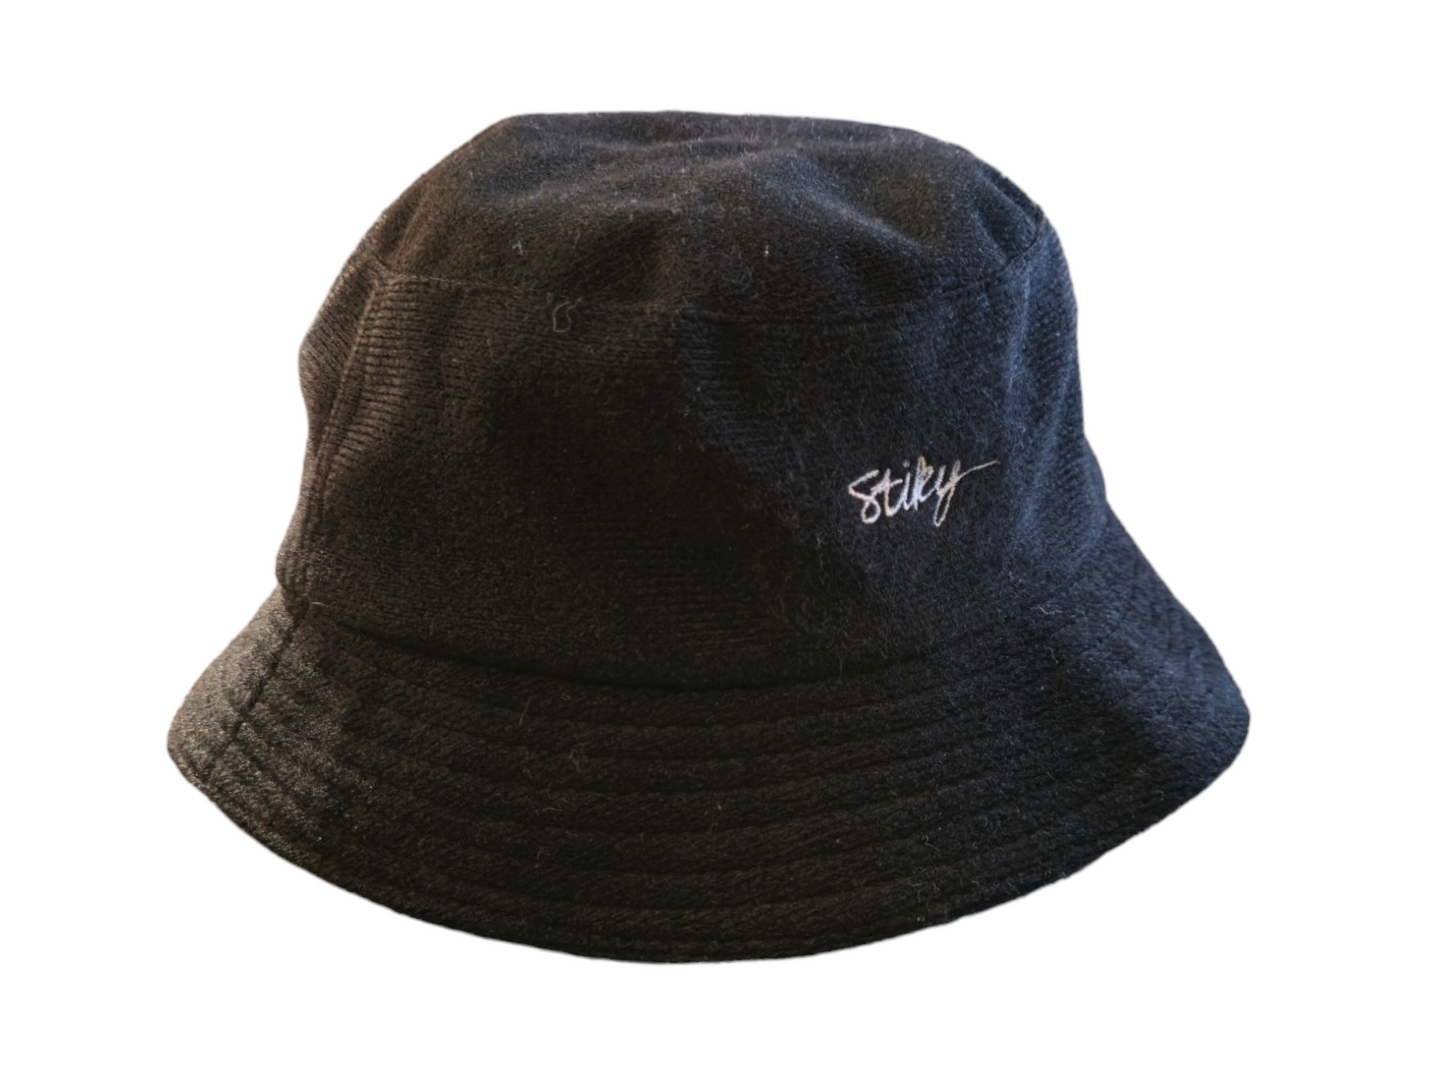 Stiky Bucket Hat - Black